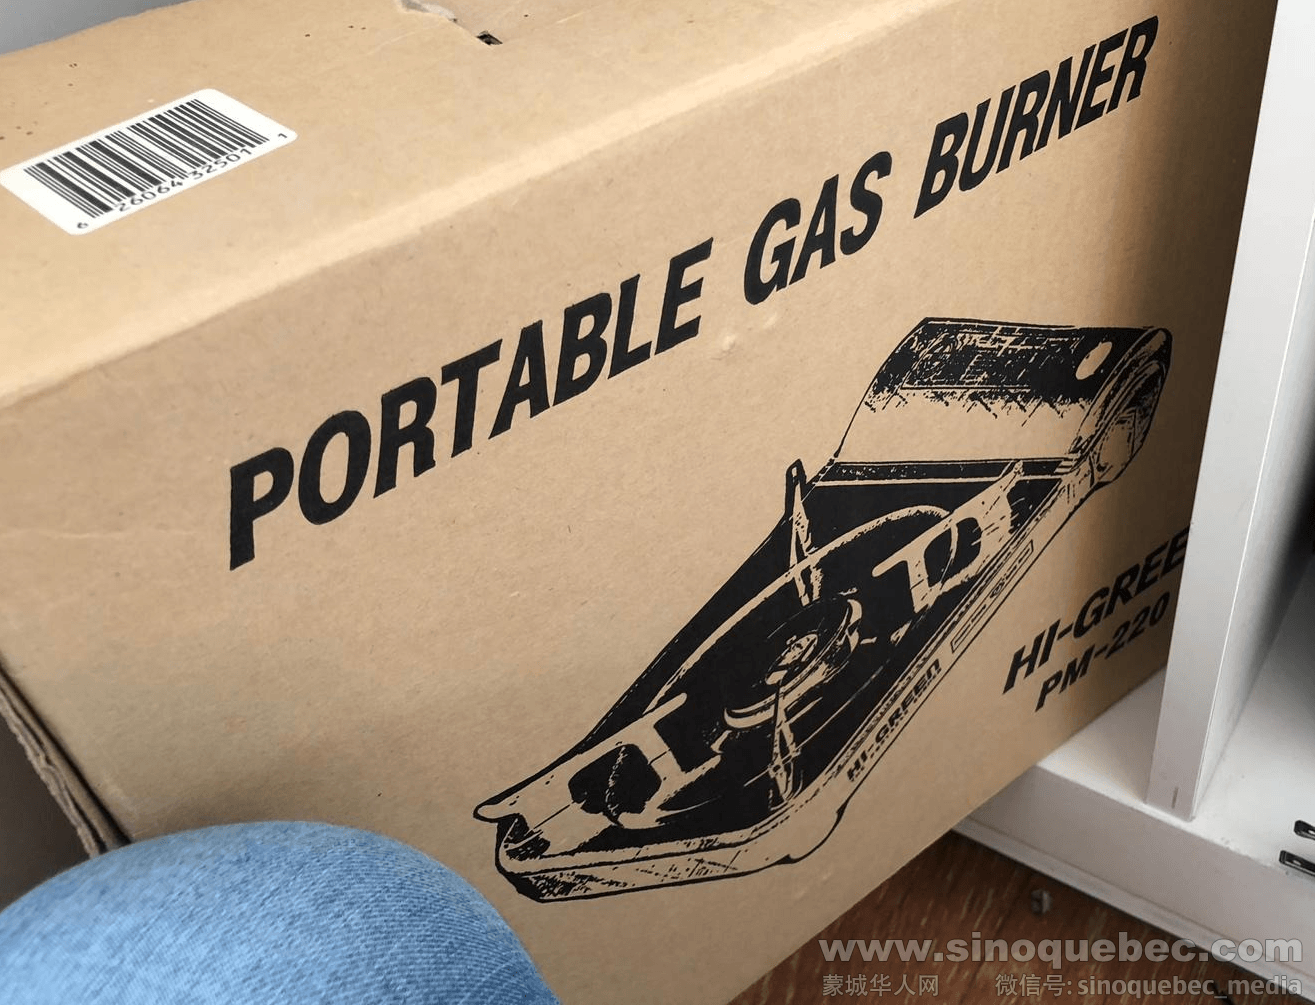 portable gas burner.png